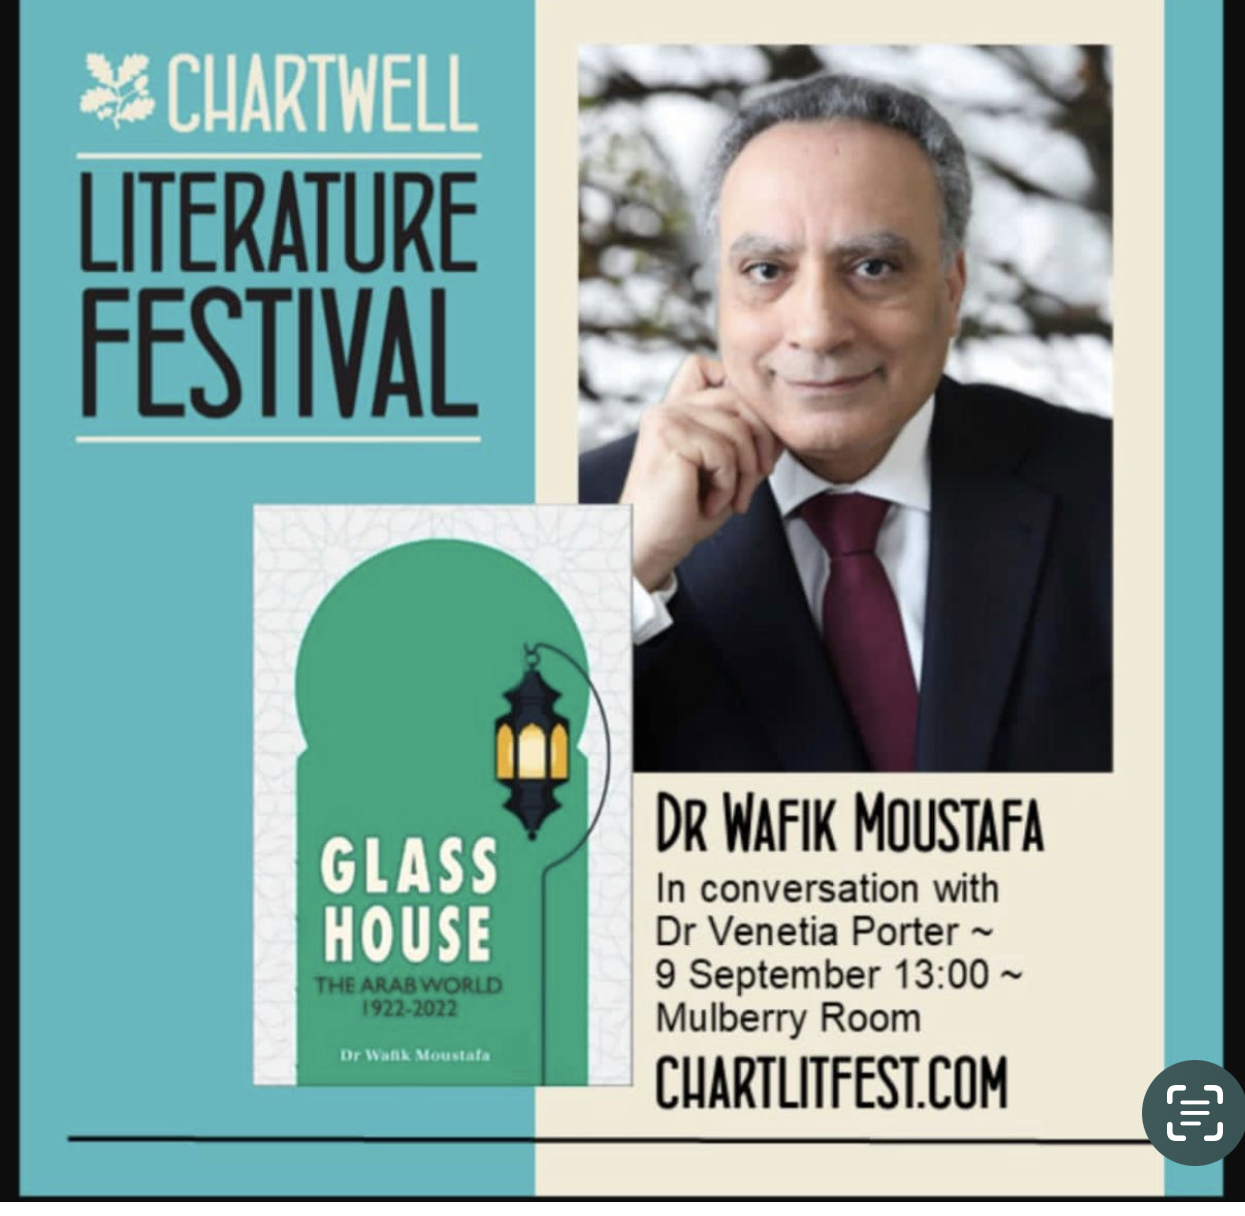 Chartwell Literature Festival